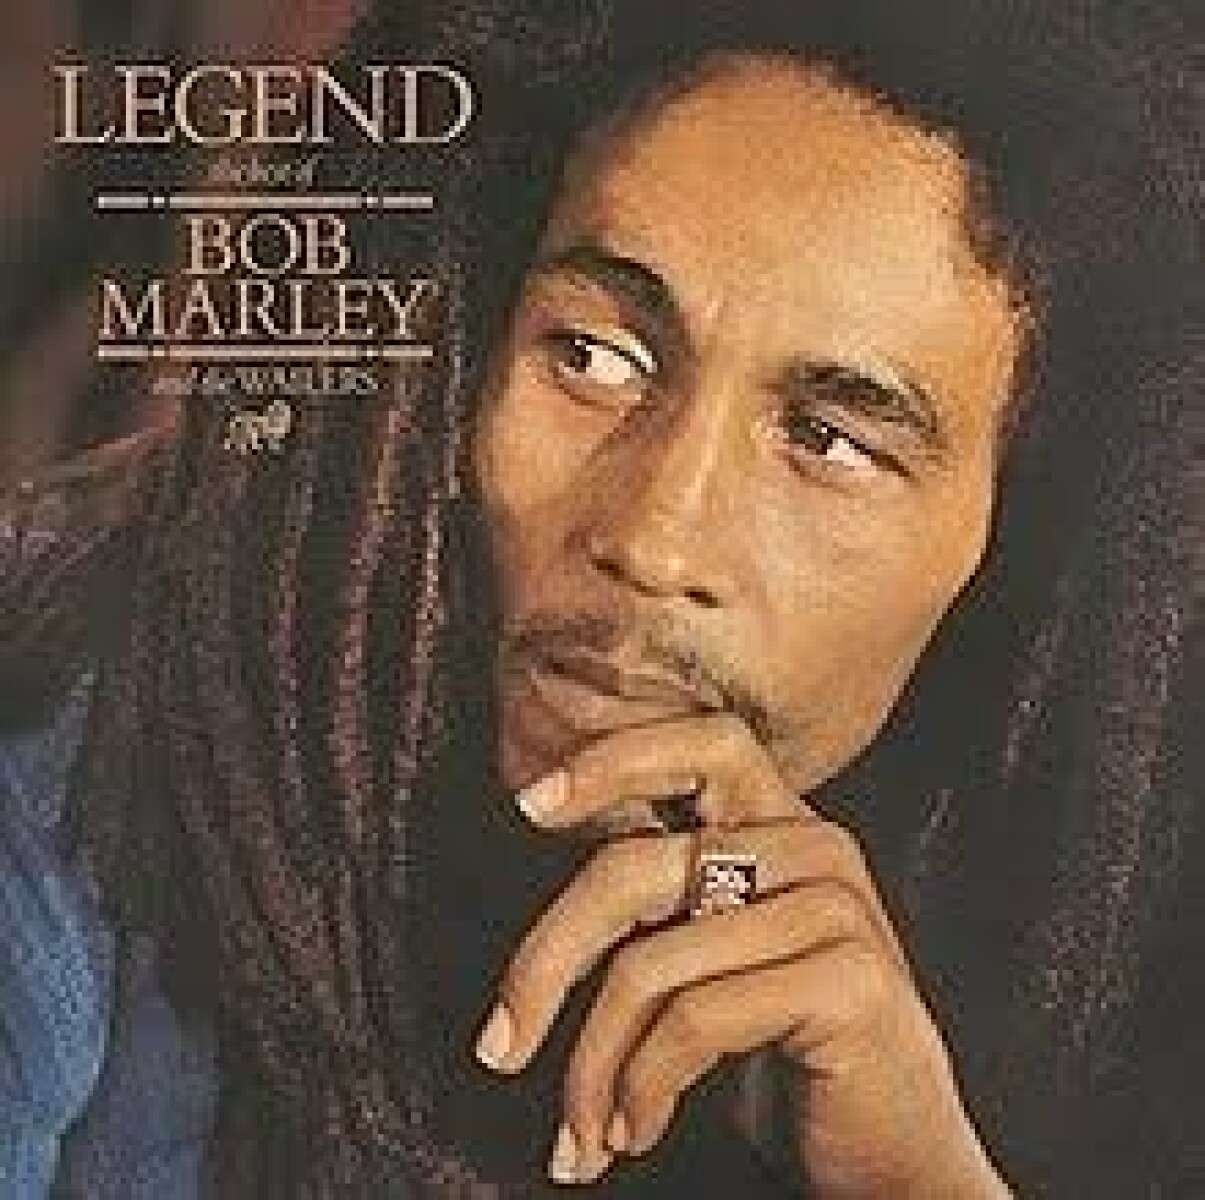 Marley Bob & Wailers-legend - Cd 